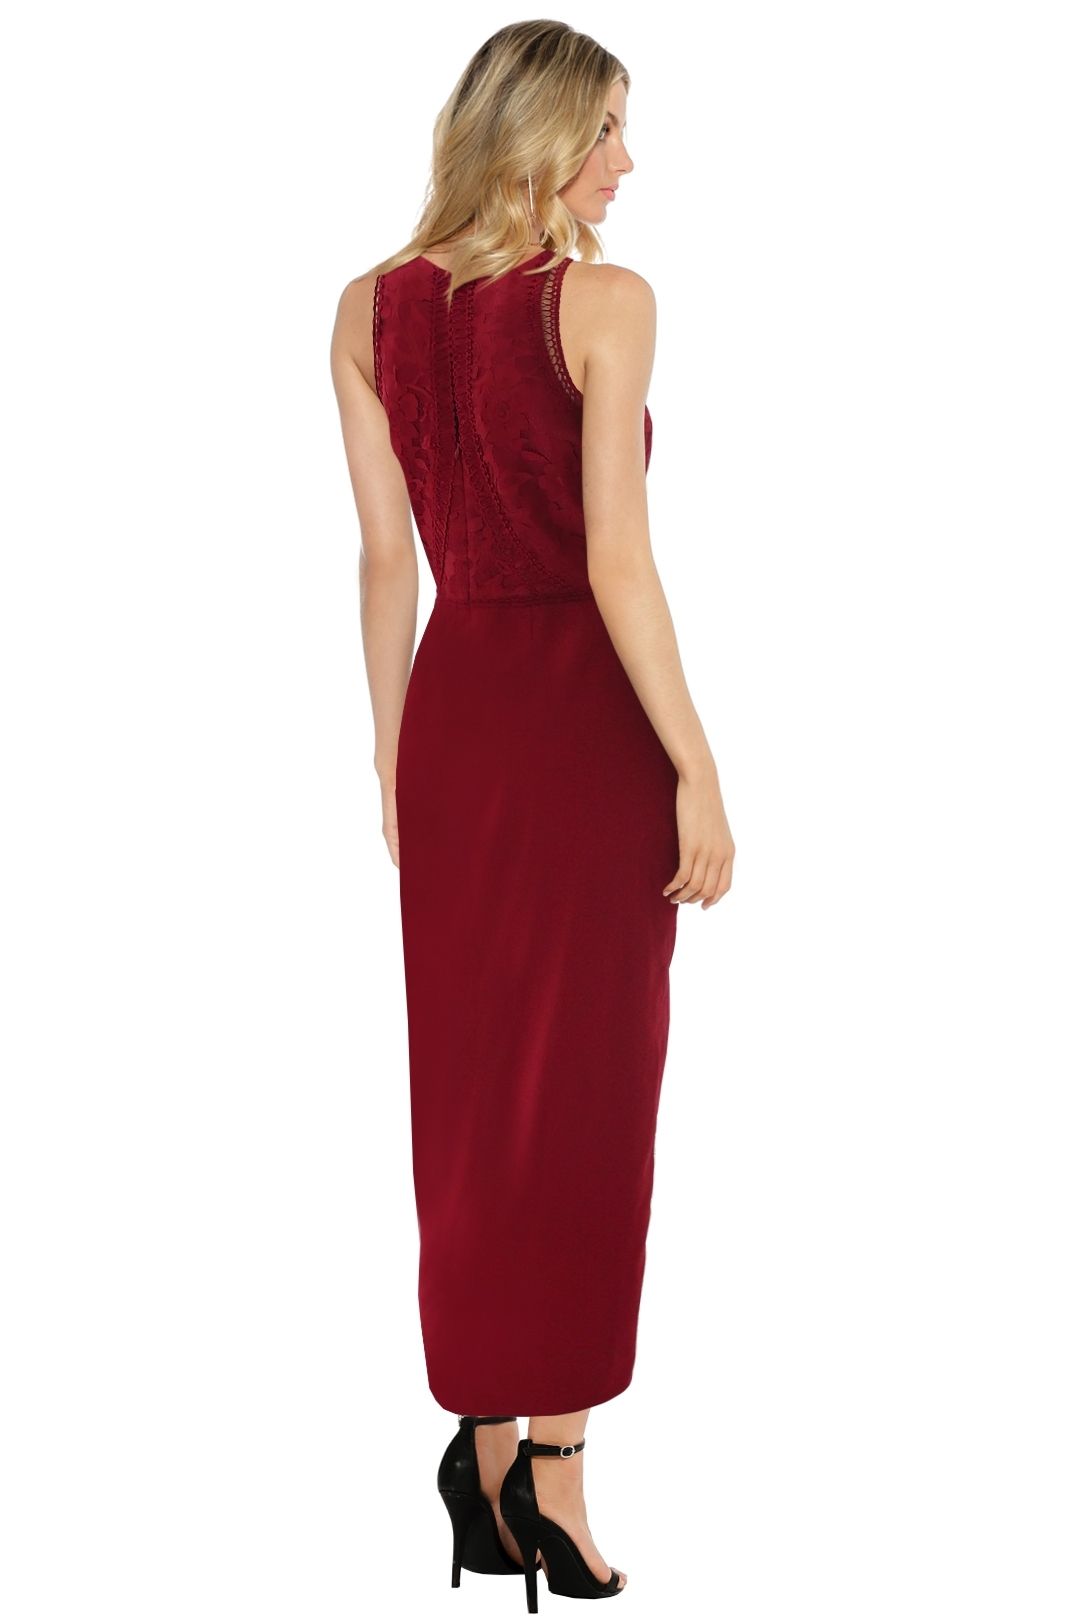 The Dress Shoppe - Spirit Carnivale Dress - Red - Back